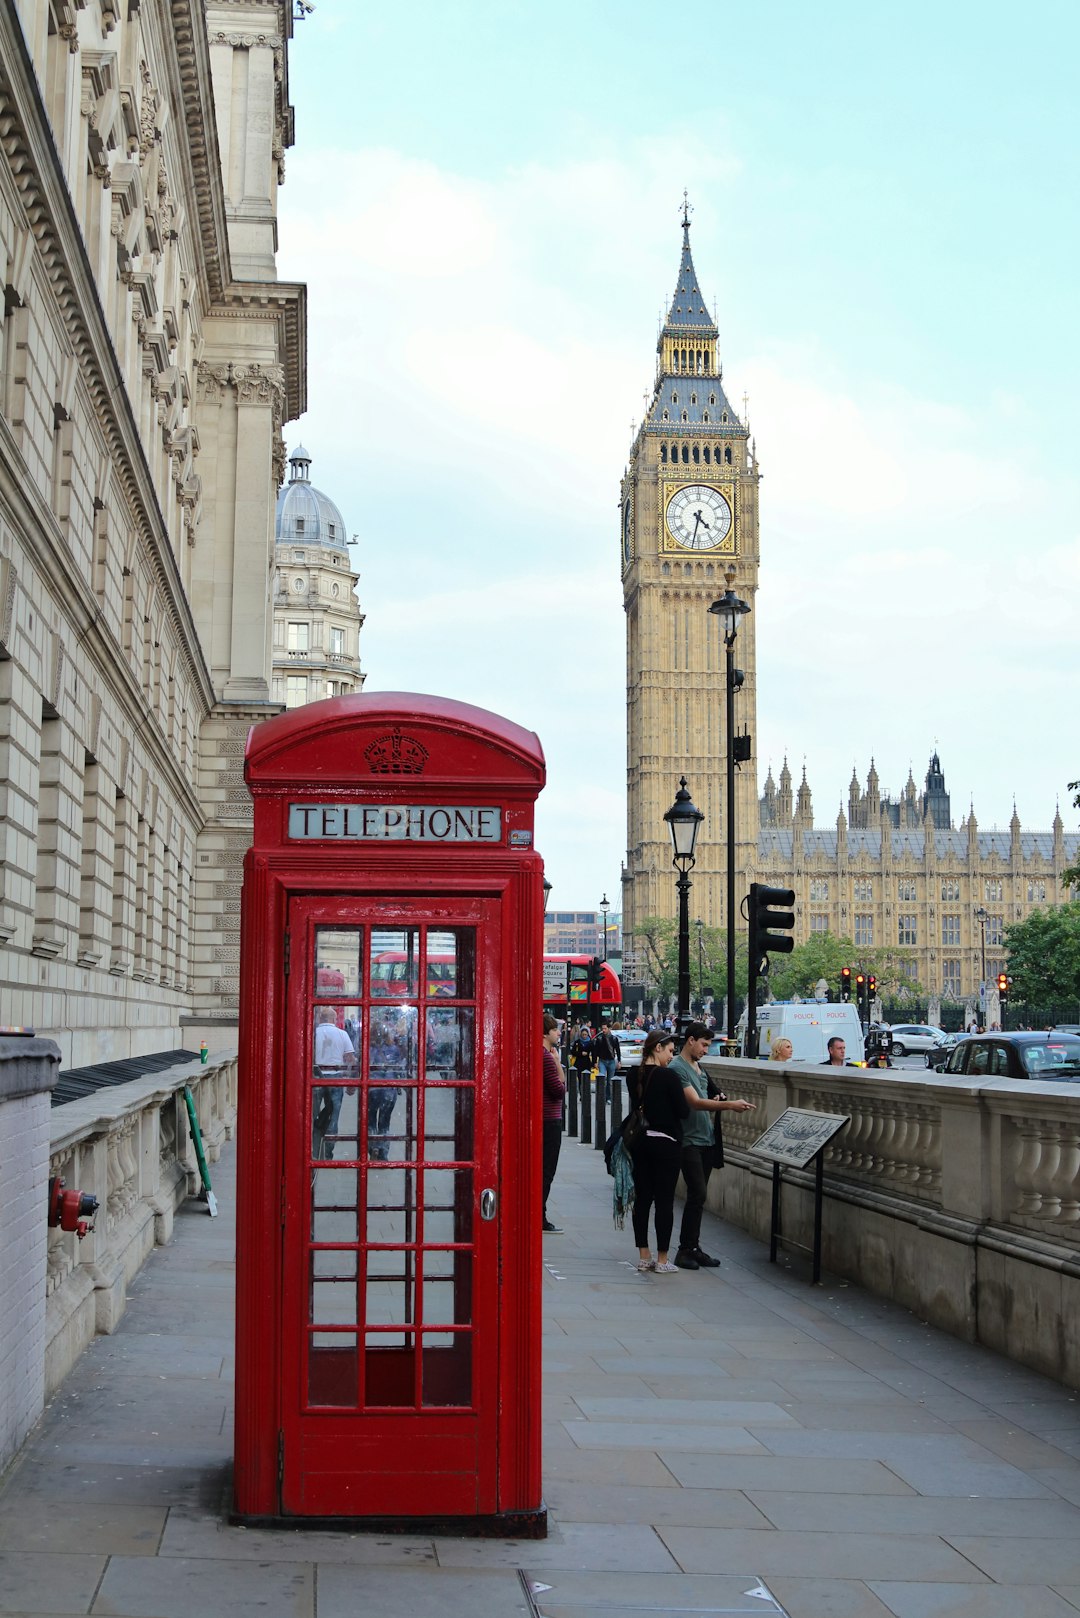 Capturing London's charm for Instagram